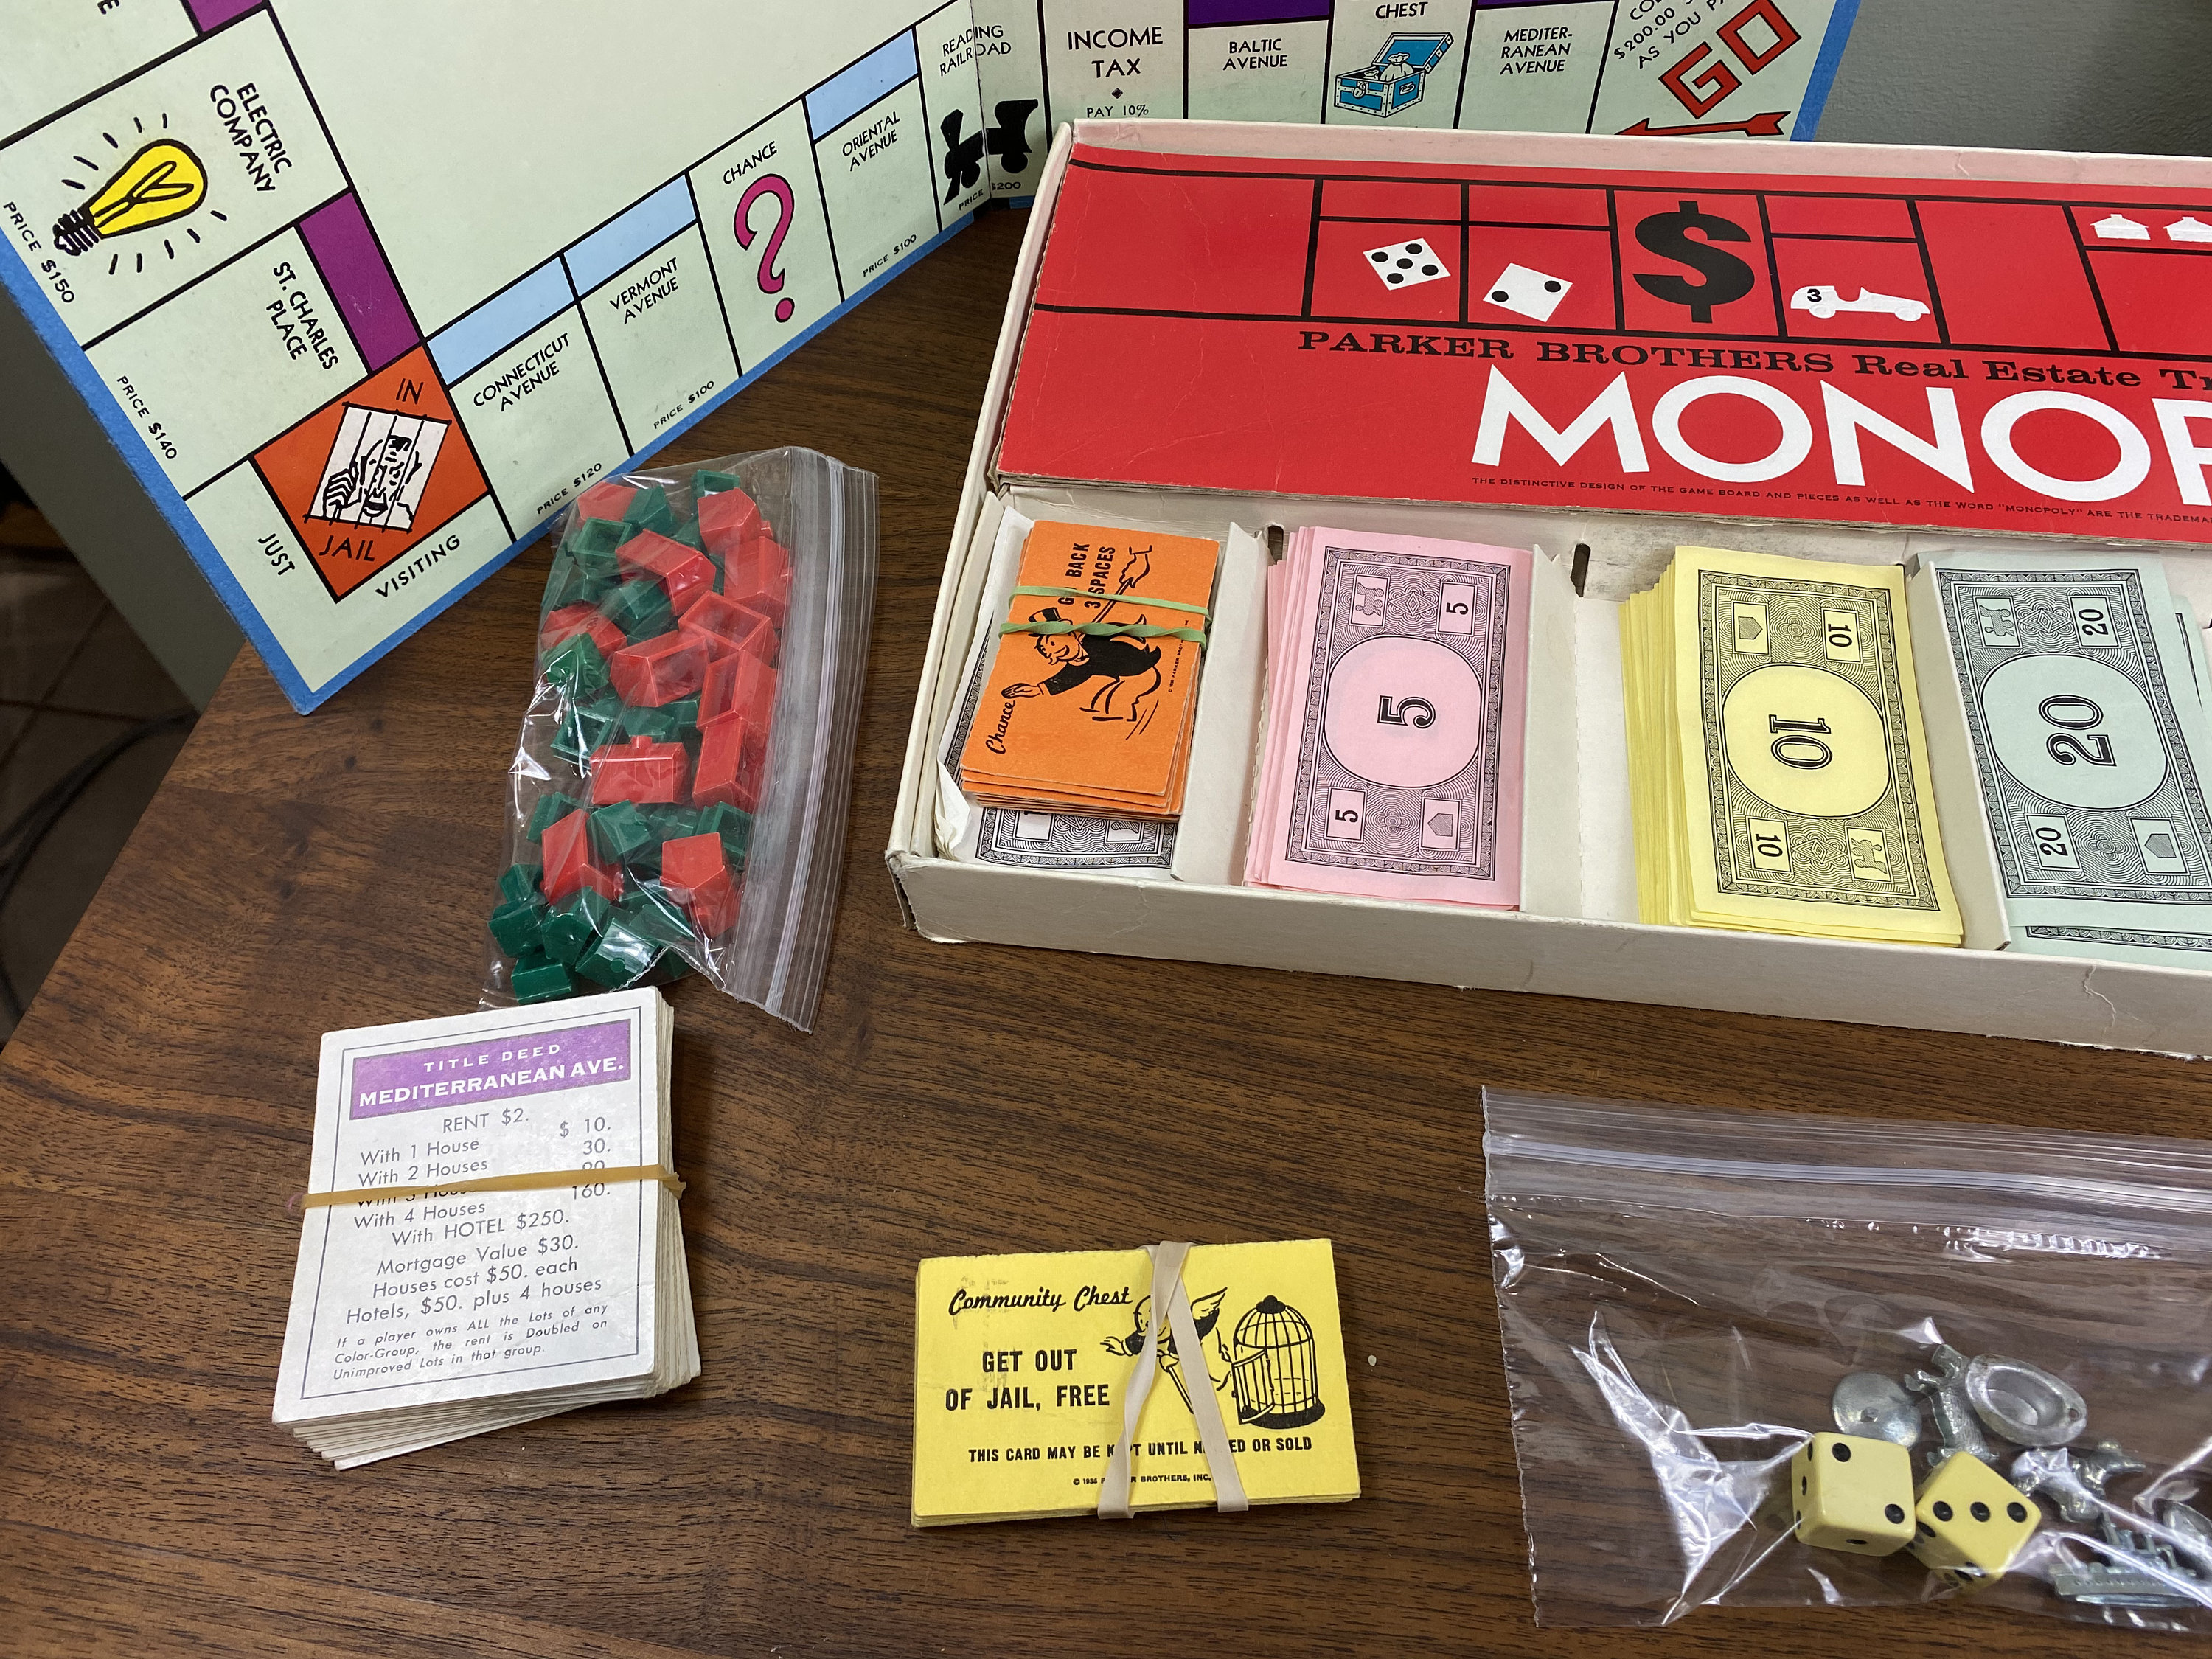 MIRO PARKER Classic Monopoly - Antique 6 Piece Complete Board Games RARE  N16